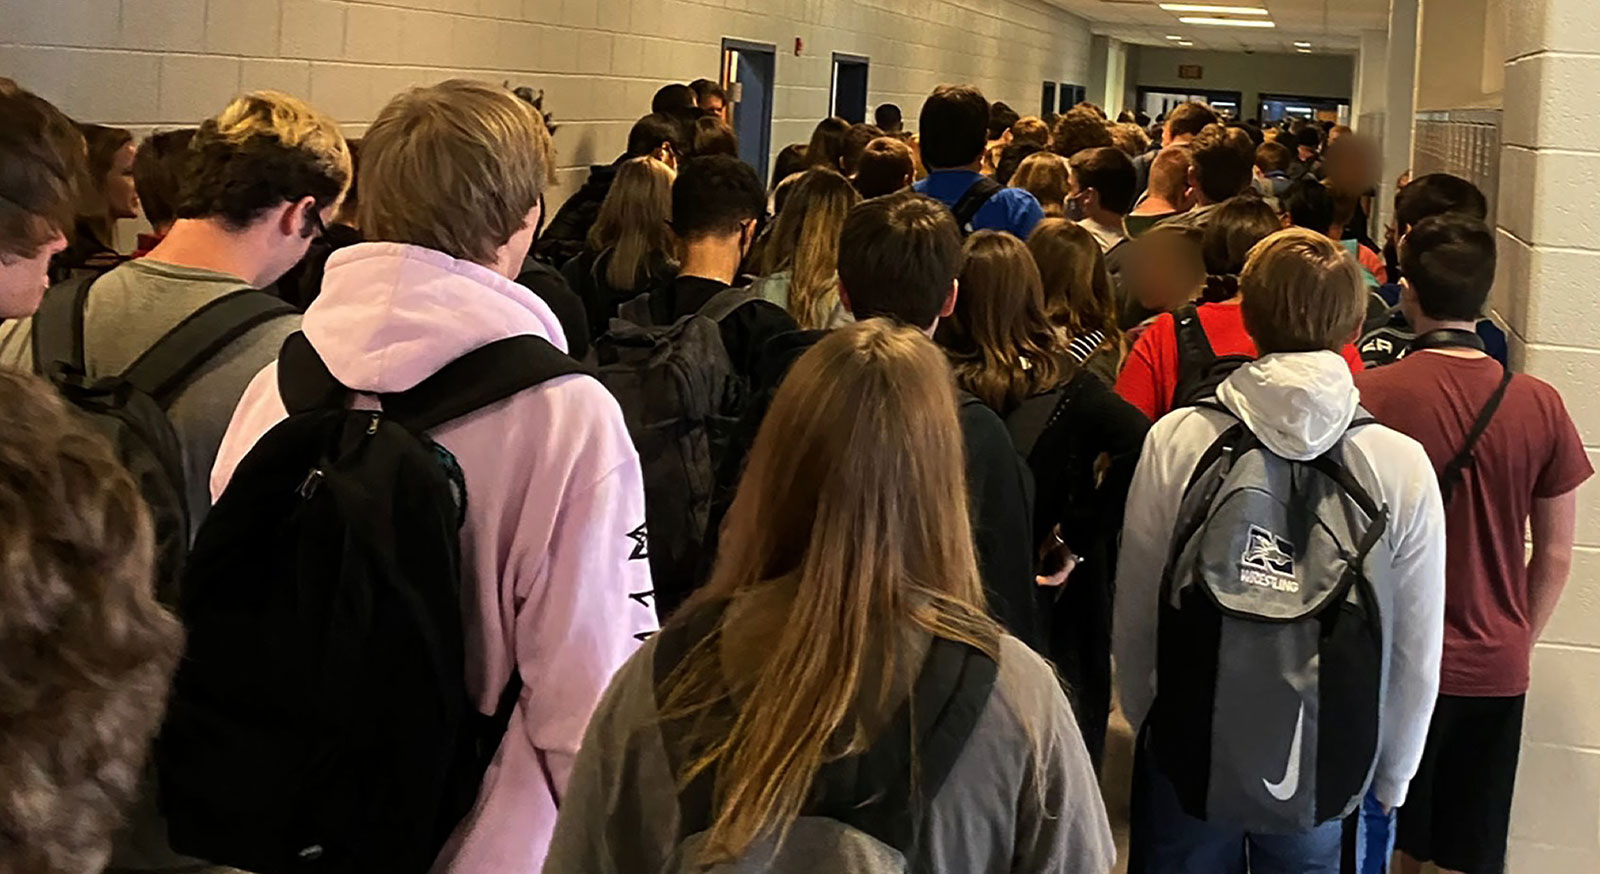 Students at North Paulding High School walk through a crowded hallway.